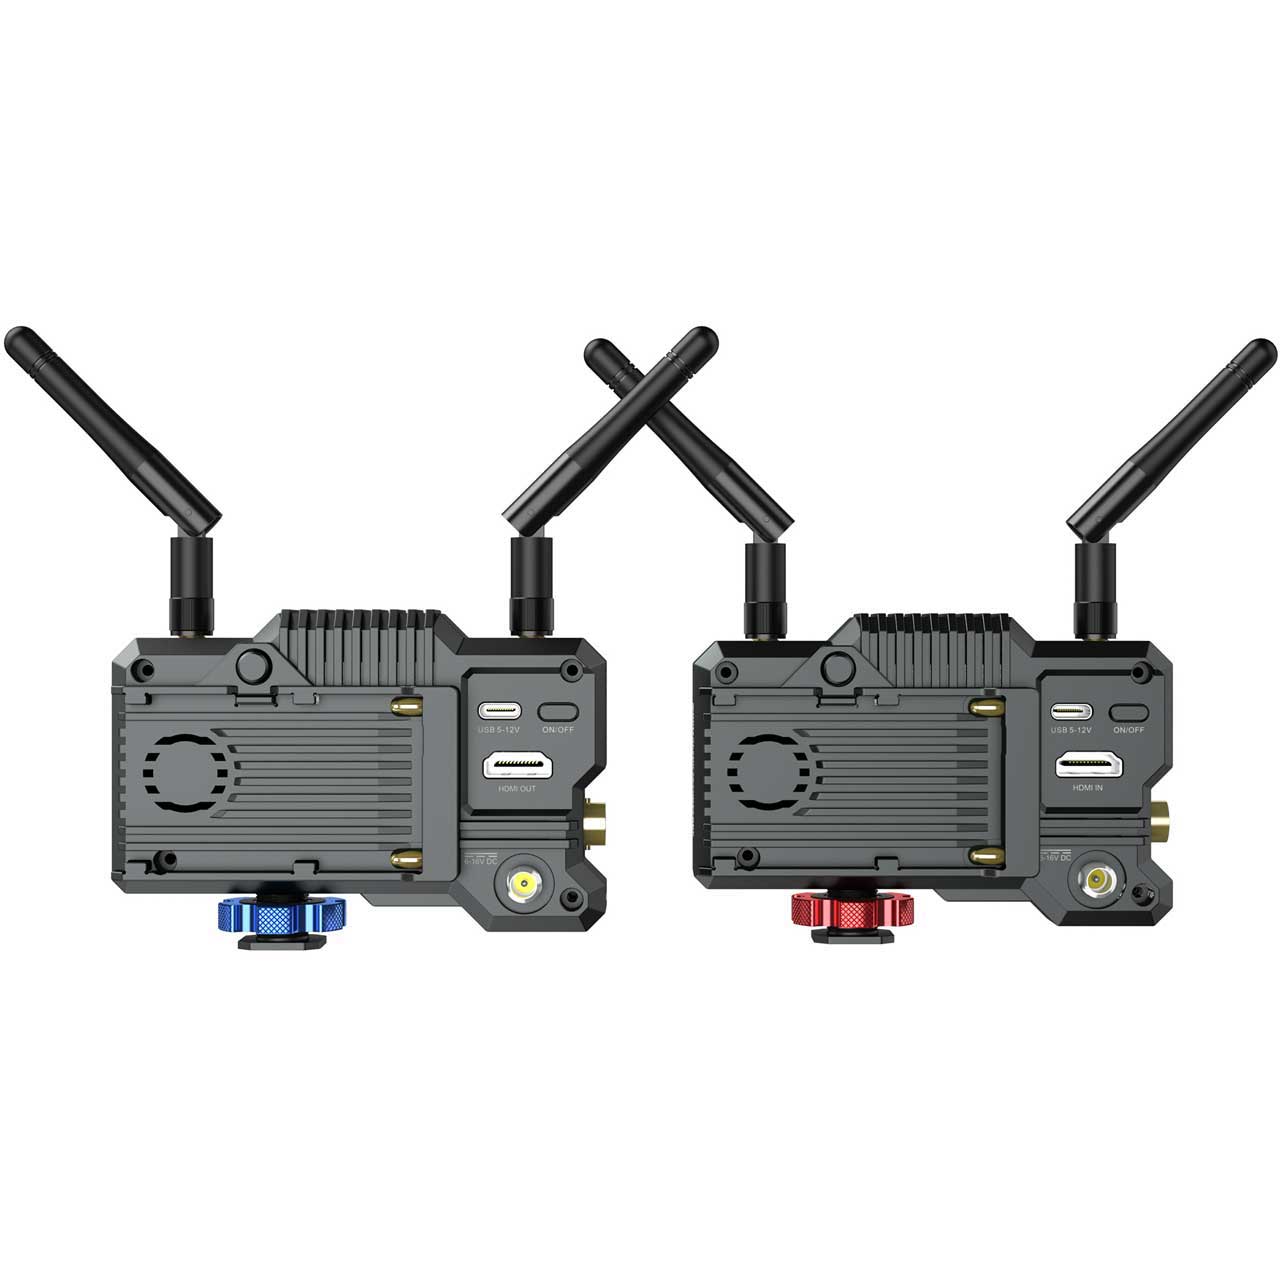 Hollyland Mars 400S PRO Receiver SDI/HDMI Wireless Video Receiver